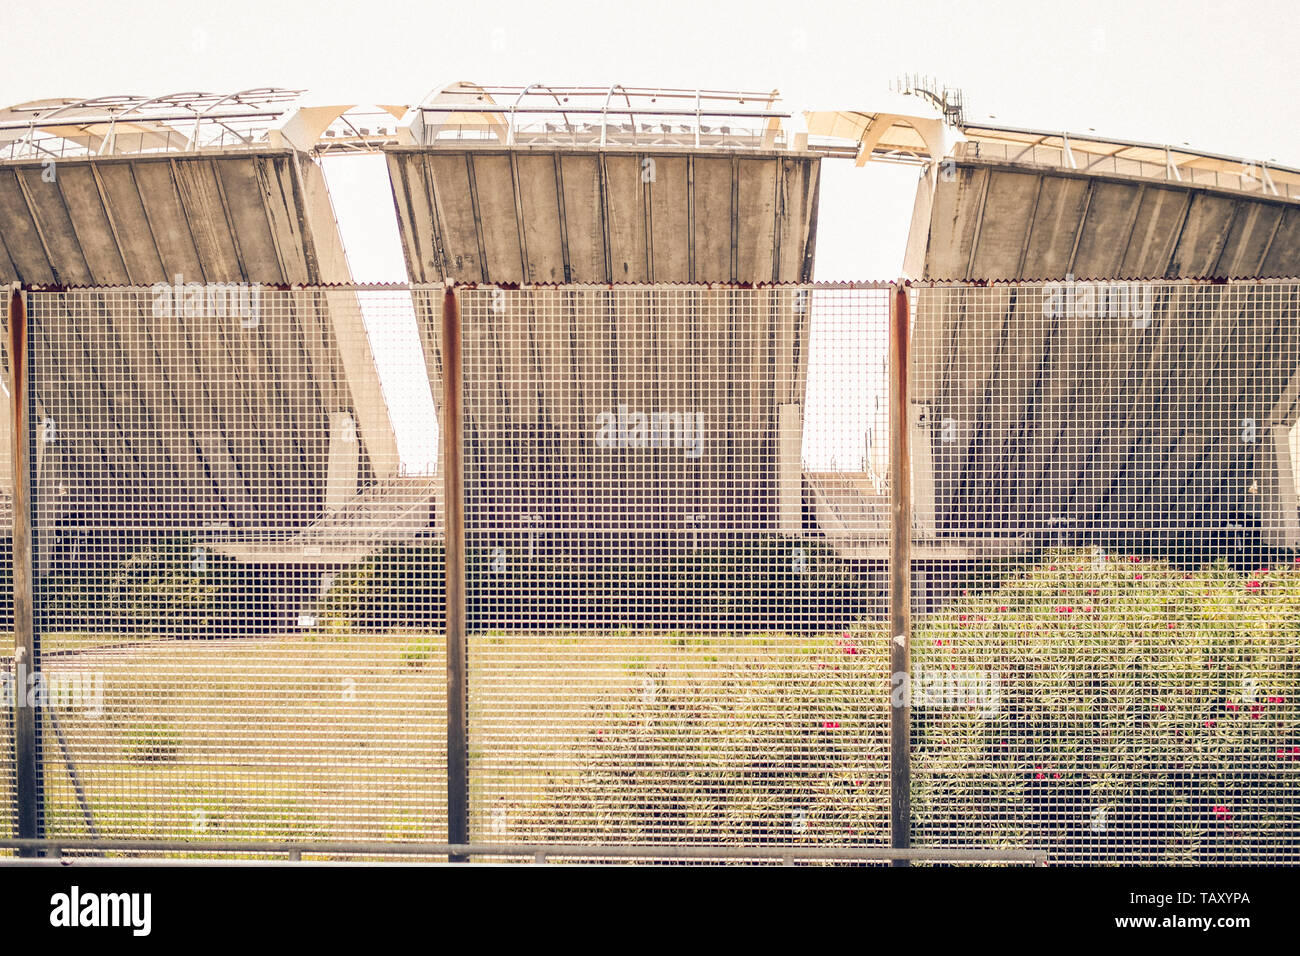 Bari Stadio San Nicola Worldcup 90 Architecture Renzo Piano Banque D'Images